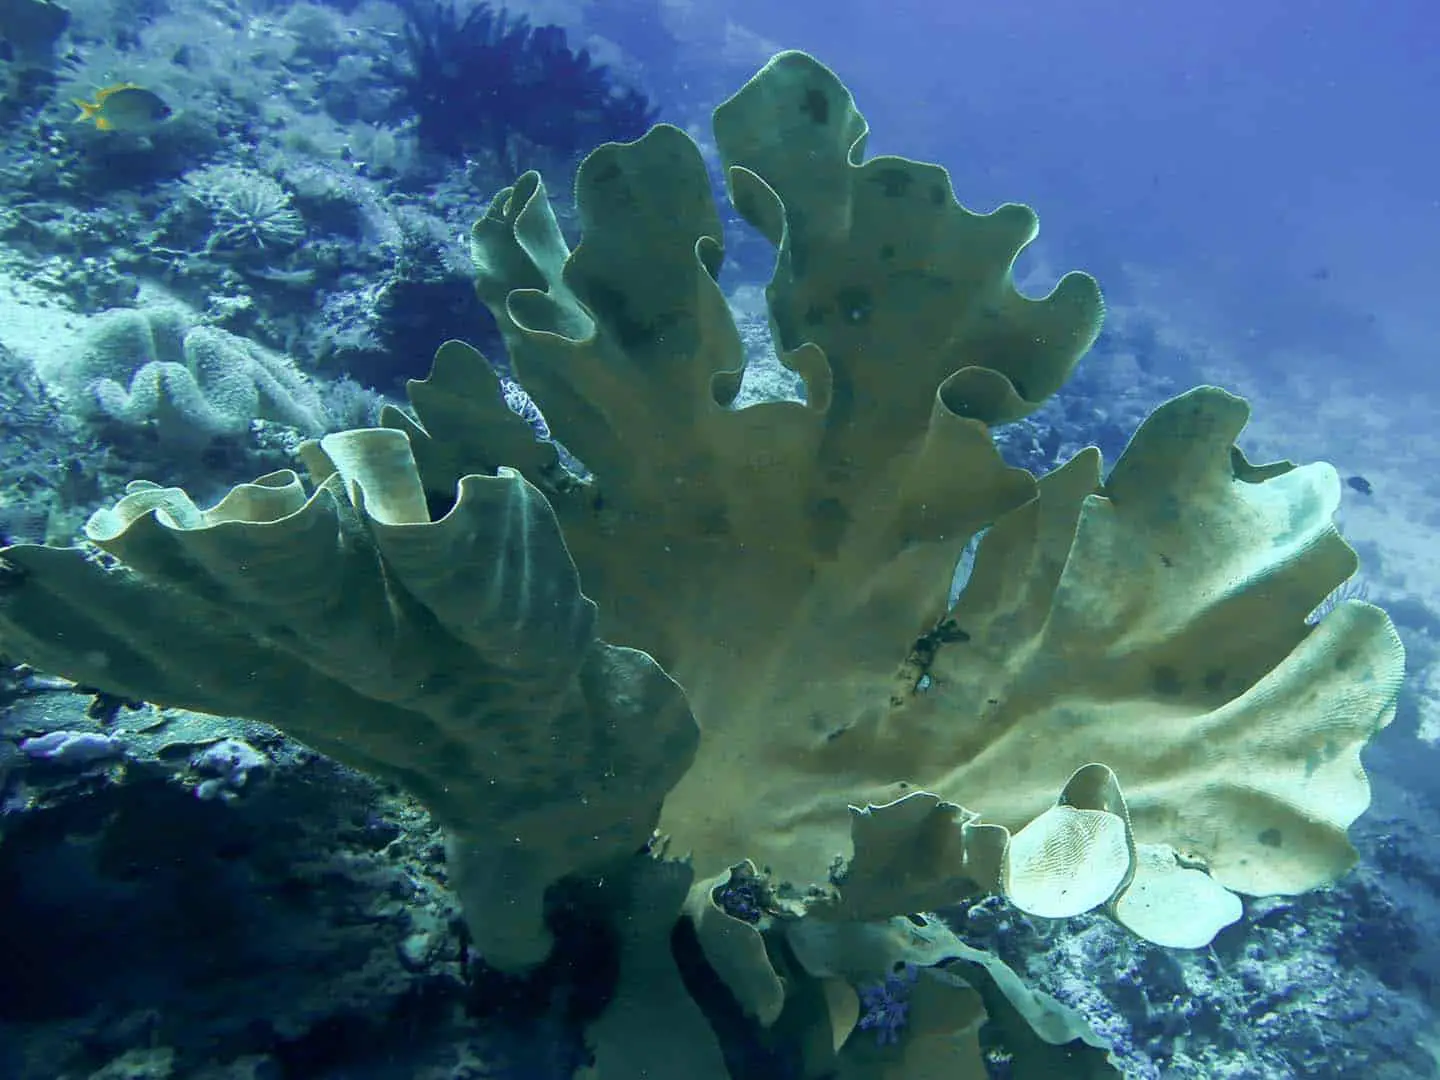 Green "leafy" corals